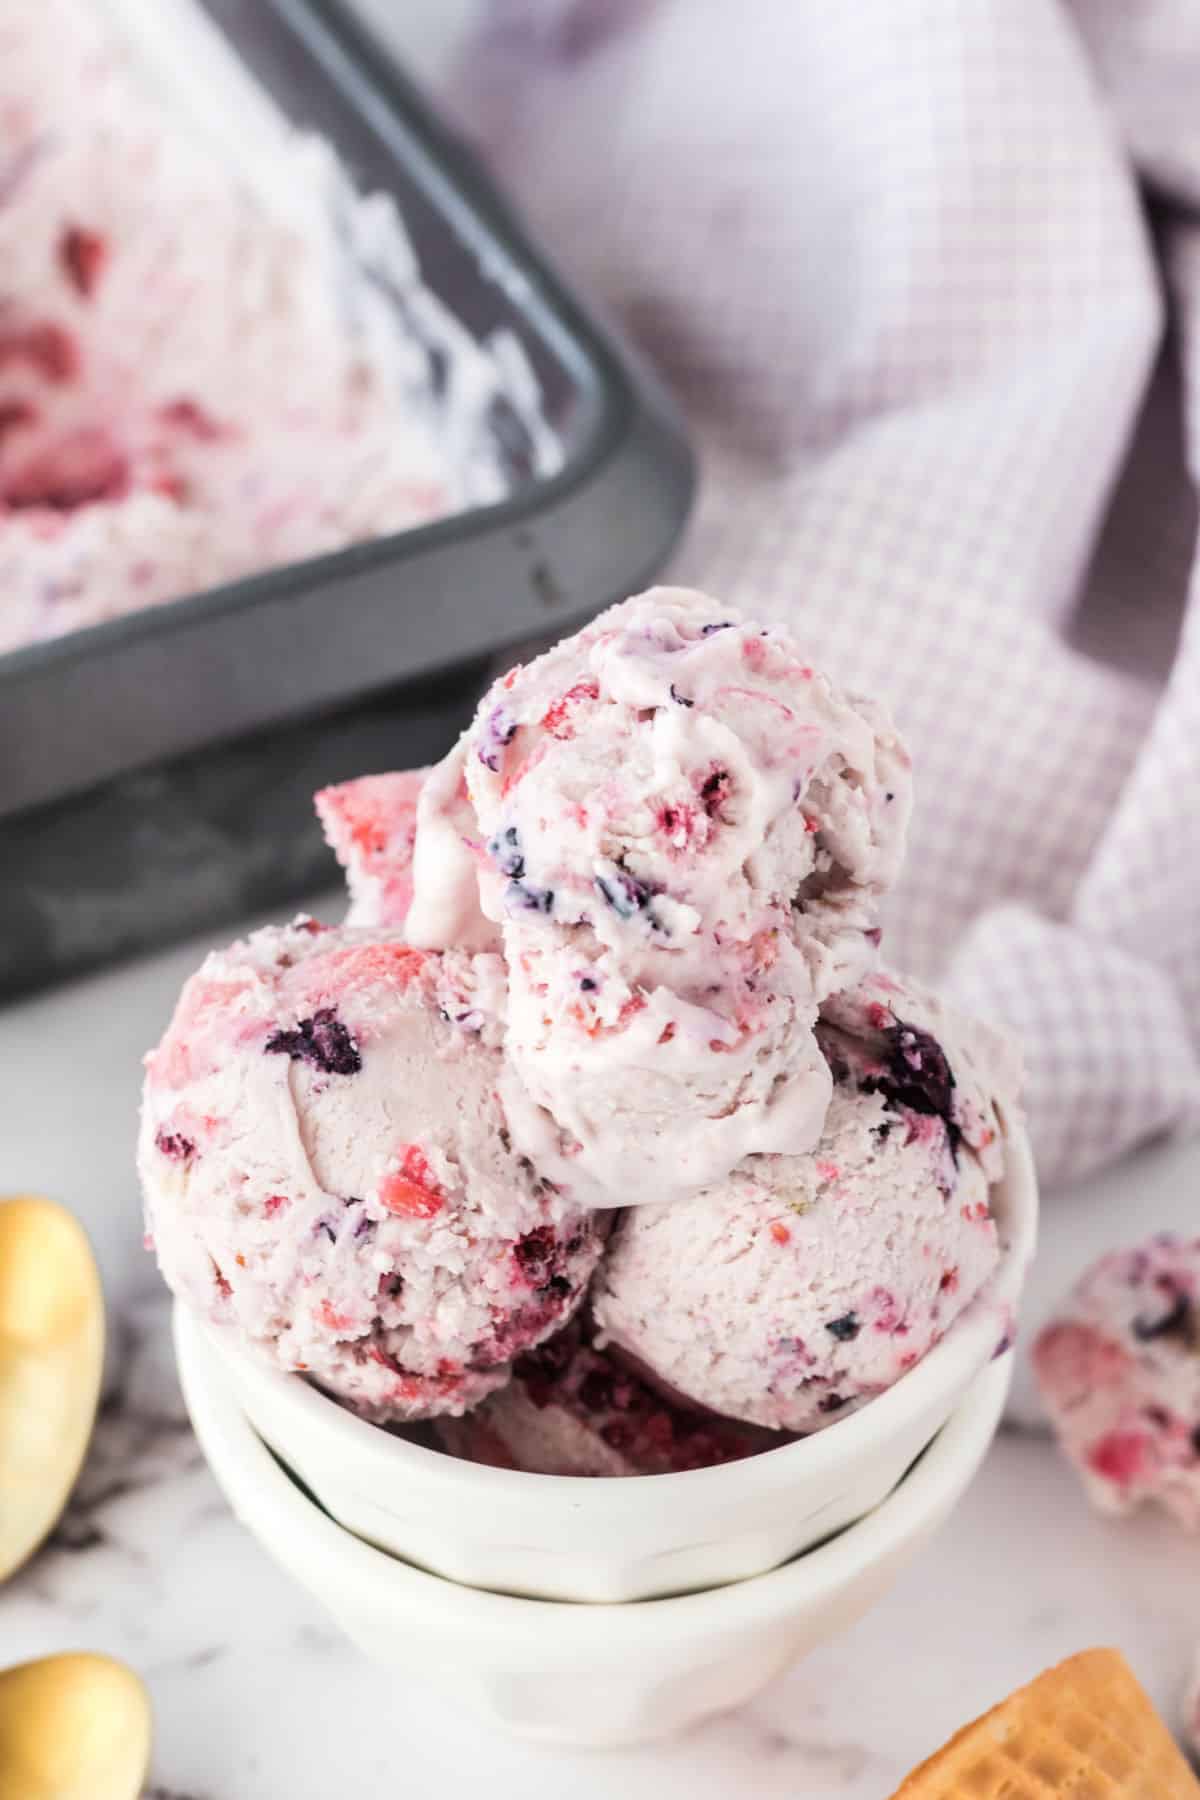 Berry ice cream served in white ice cream bowls.